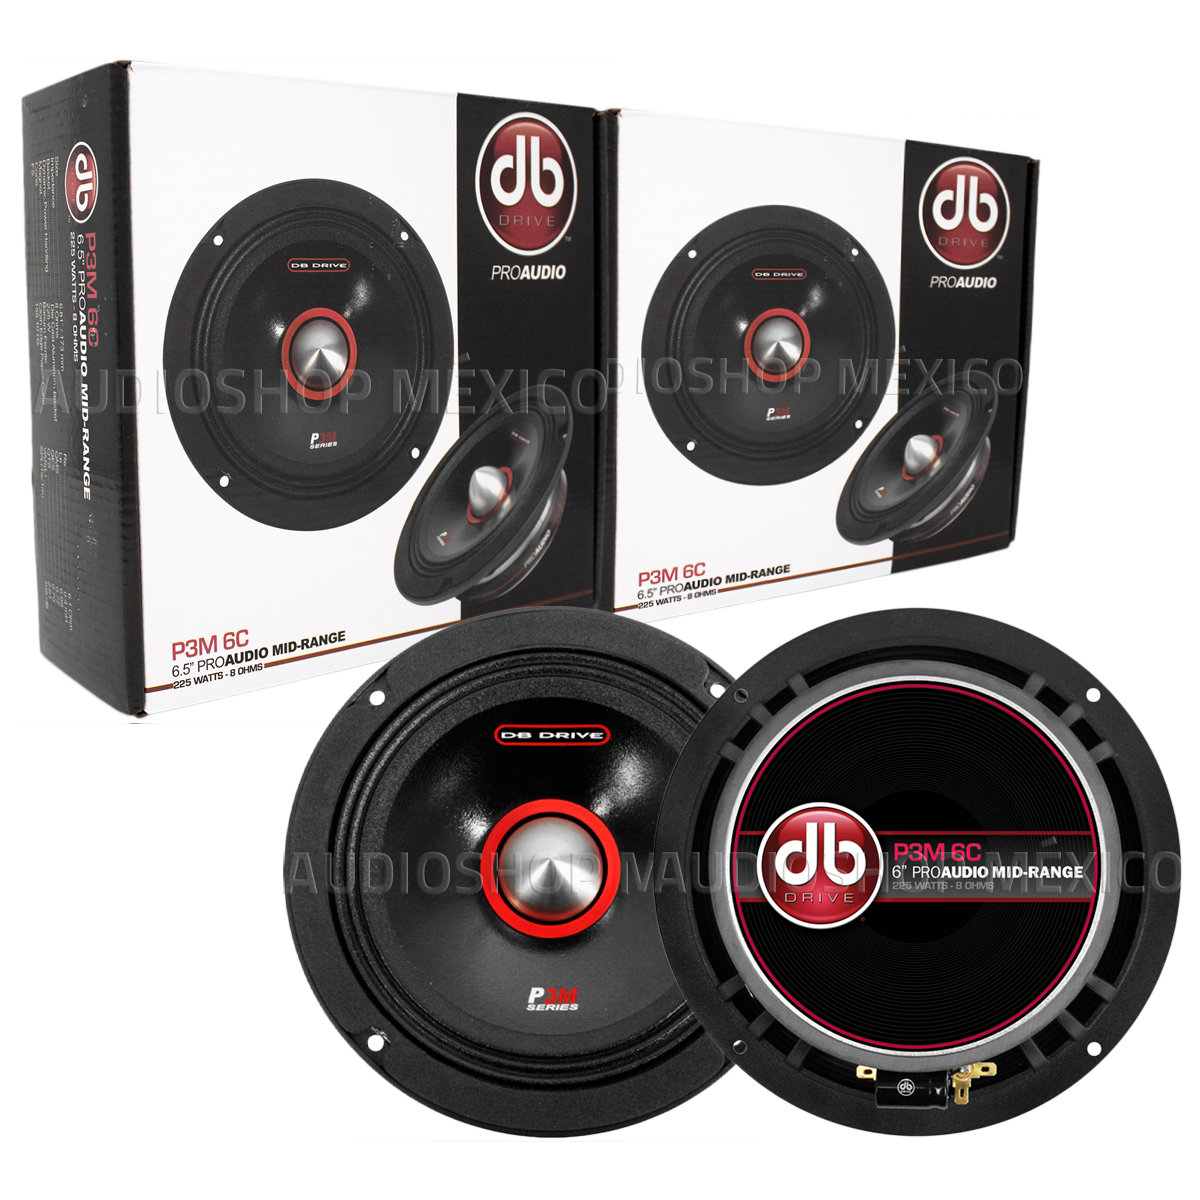 Medios Rangos DB Drive P3M 6C 450 Watts 6.5 Pulgadas 8 Ohms PRO Audio Series (Venta por par)